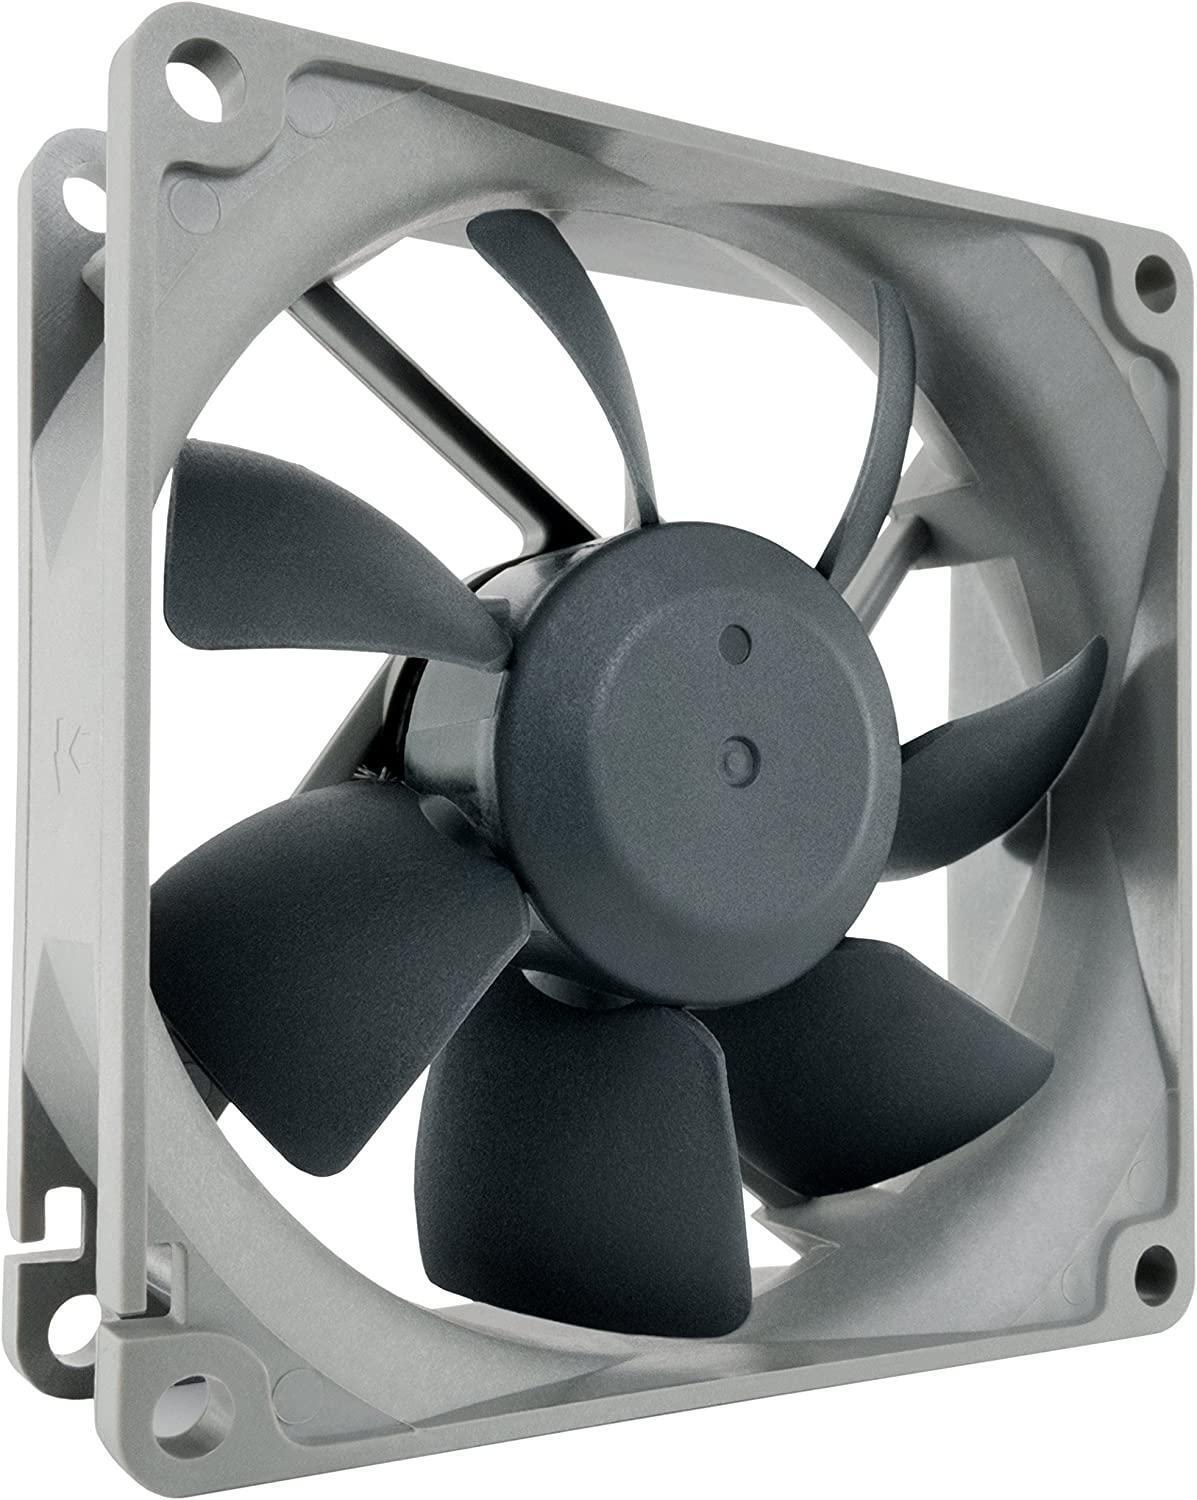 Noctua Nf-r8 Redux-1800, High Performance Cooling Fan, 3-pin, 1800 Rpm